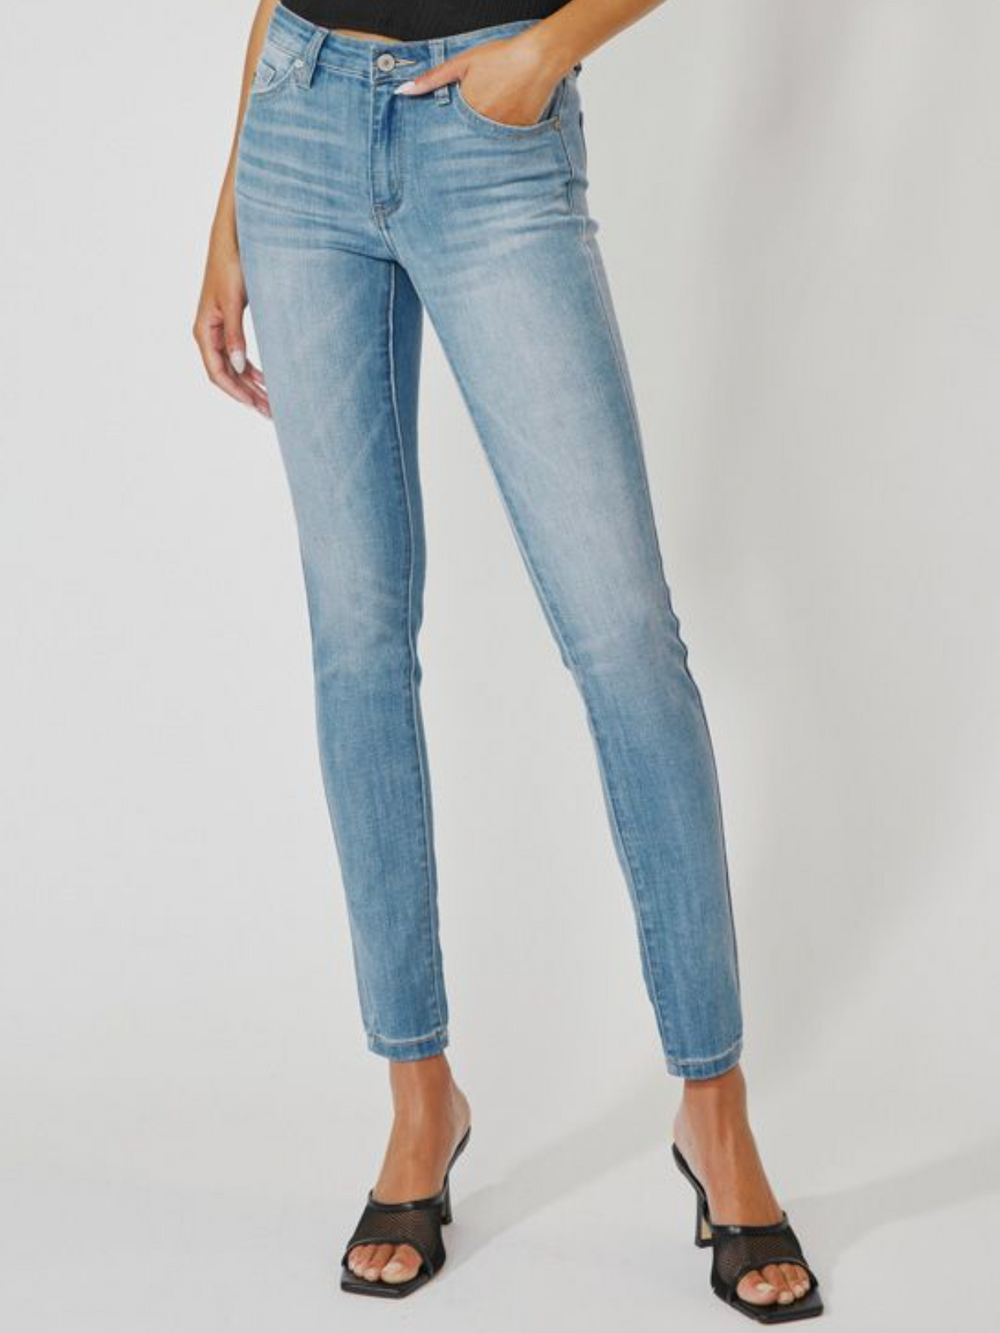 Kancan: Always Iconic Perfect Non Distressed Denim Jean | 5 Washes, Reg/Plus-Jeans-Krush Kandy, Women's Online Fashion Boutique Located in Phoenix, Arizona (Scottsdale Area)